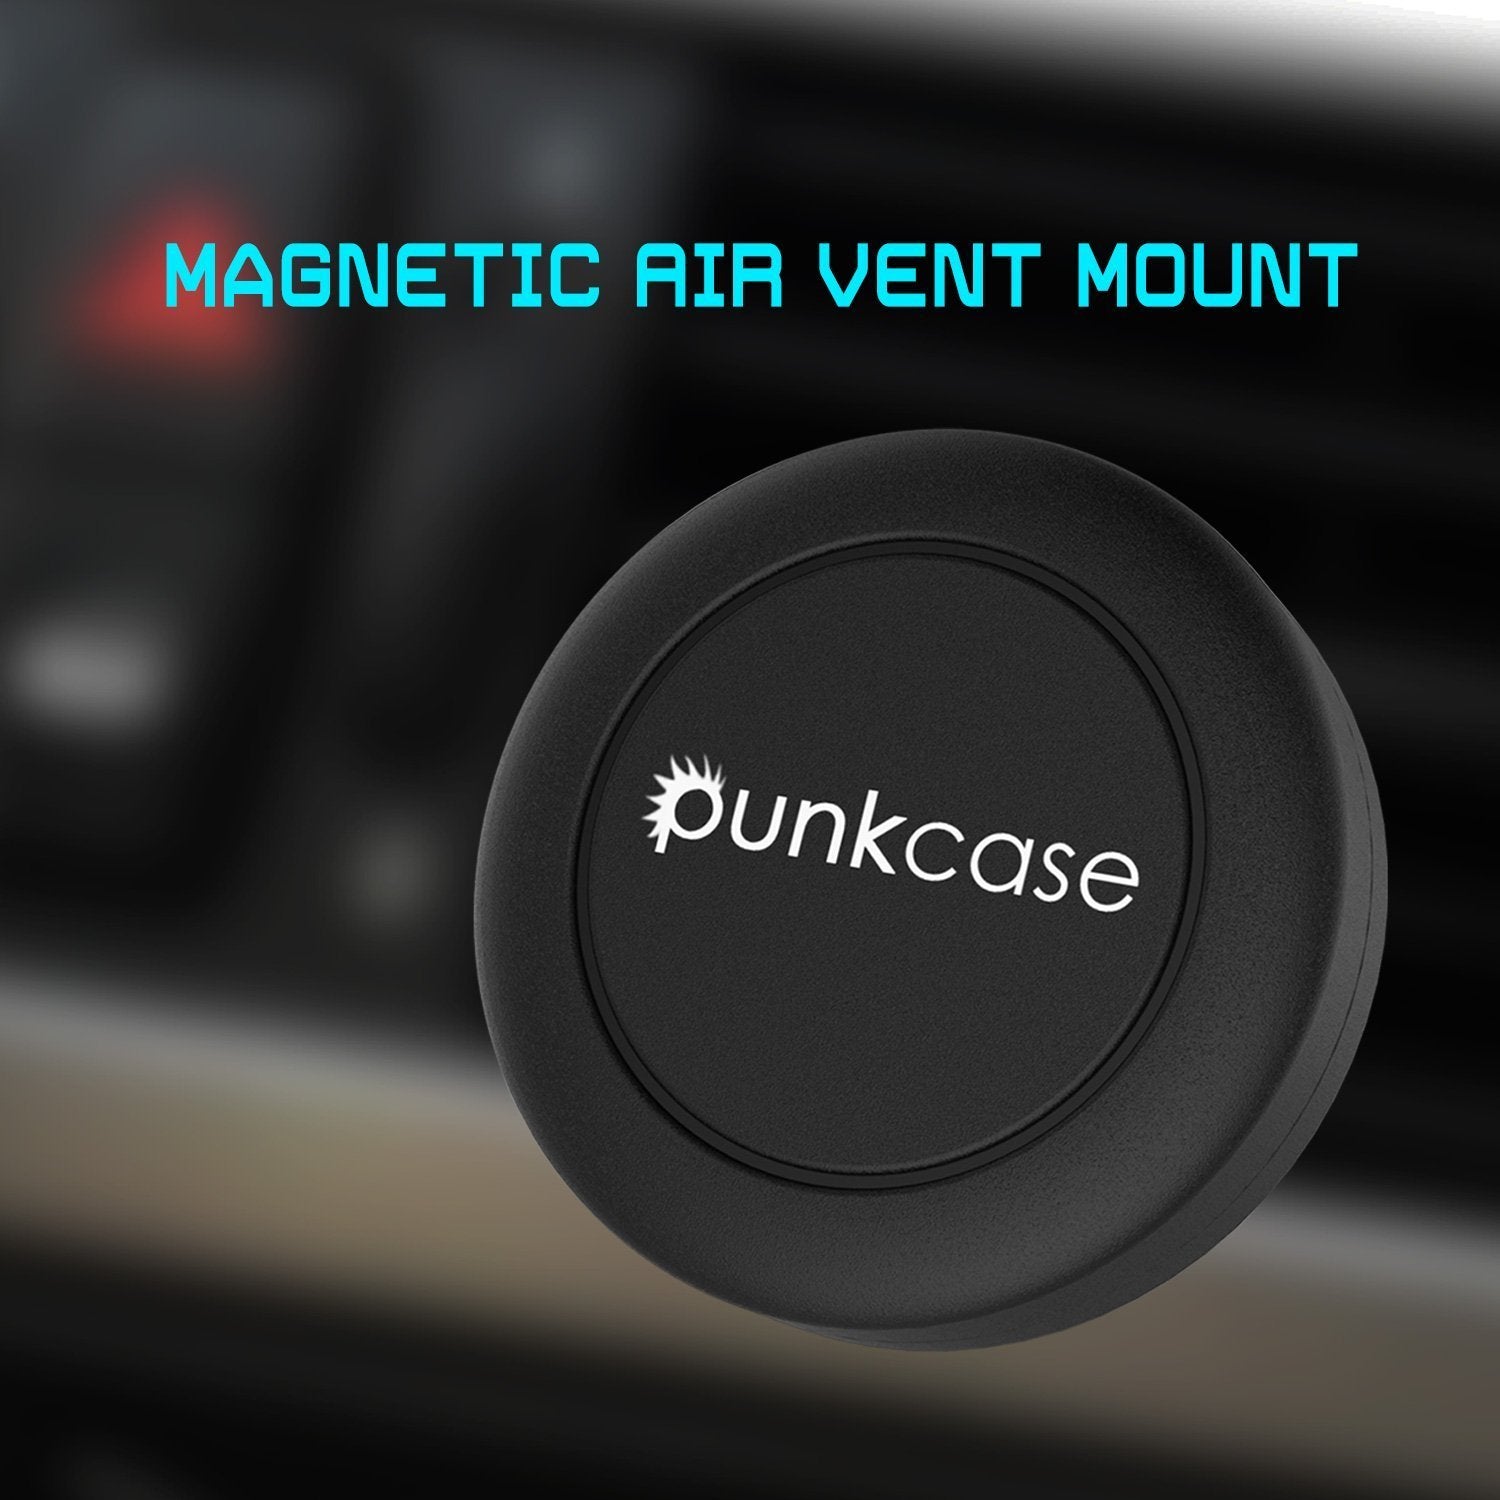 Punkcase Force 2 Magnetic Air Vent Mount, Universal Car Cellphone Holder (BLACK)